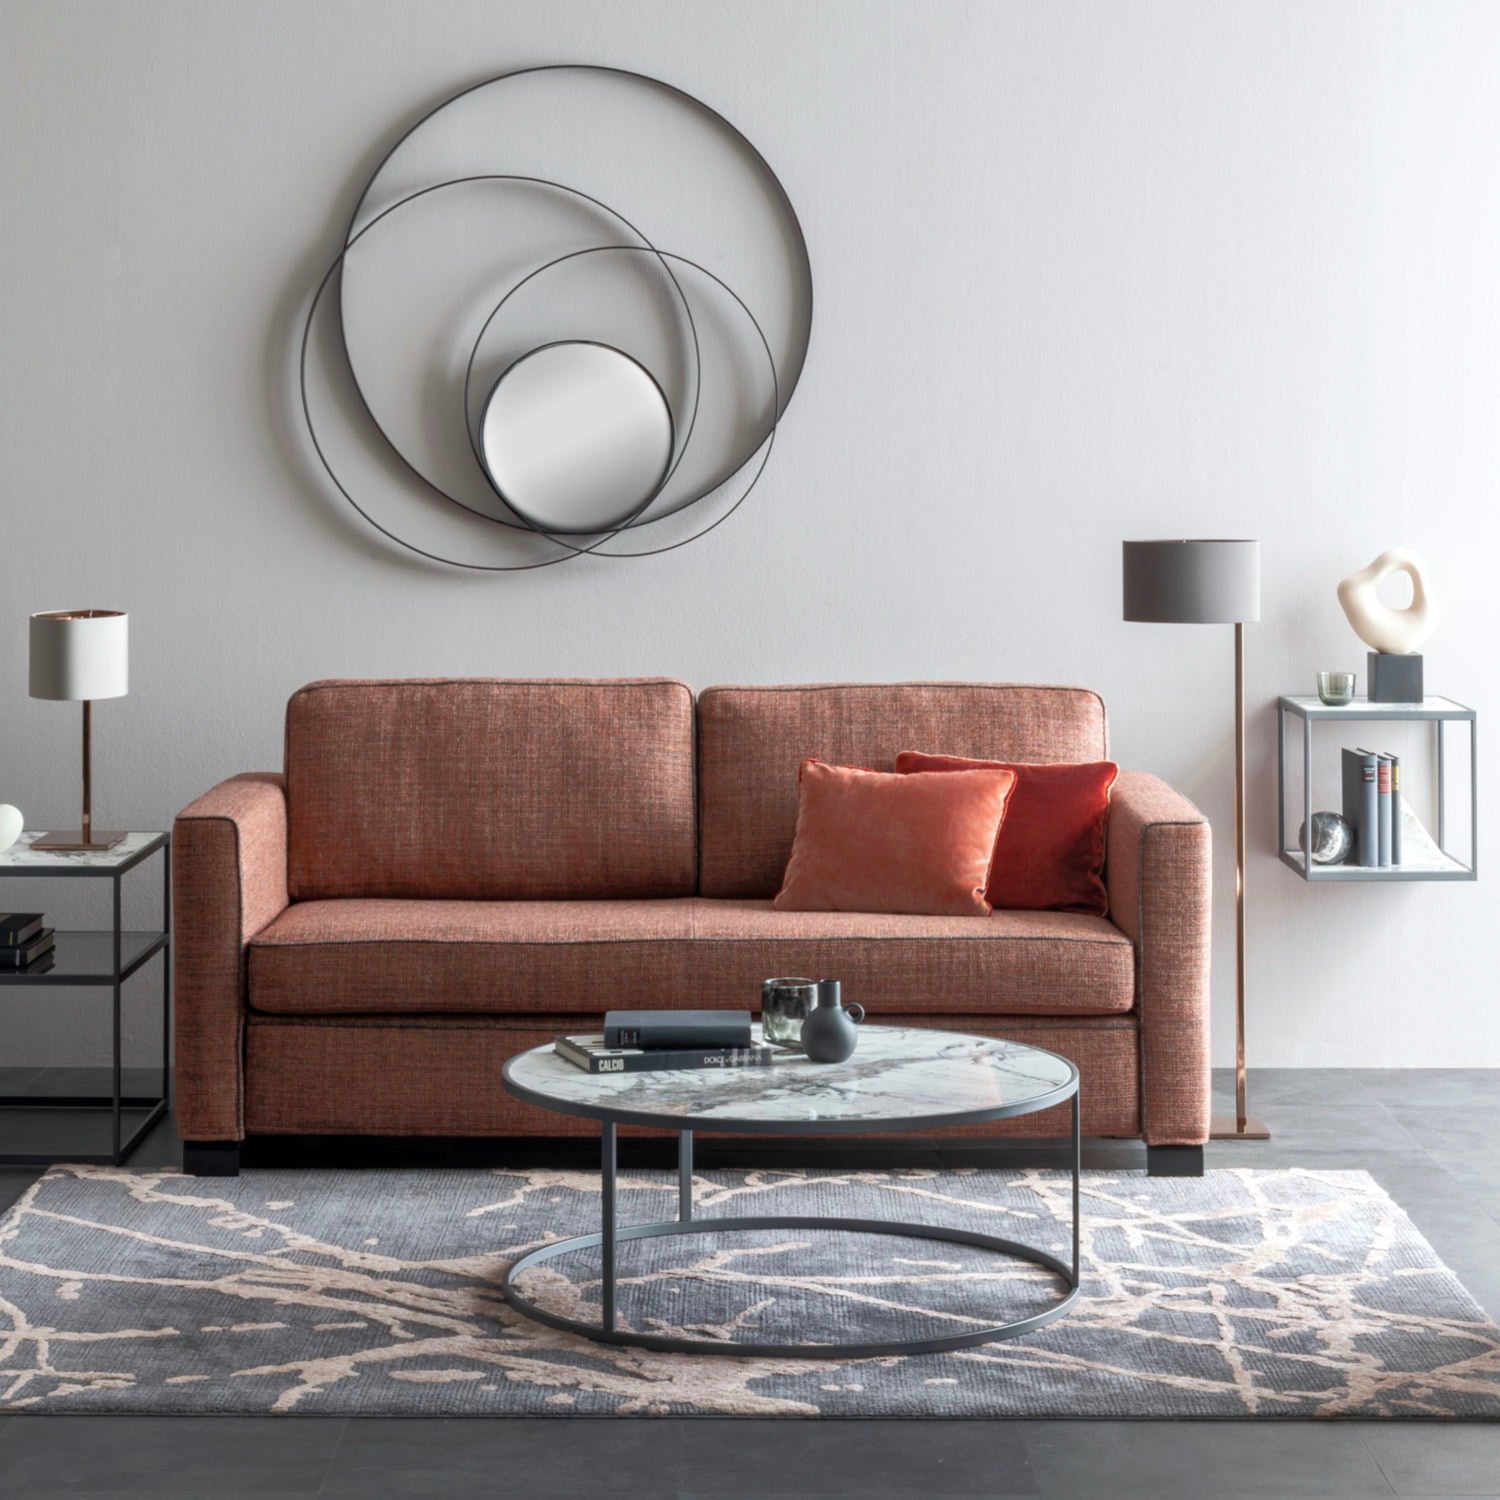 JULYA Sofa, SOLEY mirror, CAMEO table, MONO lamps by Christine Kröncke